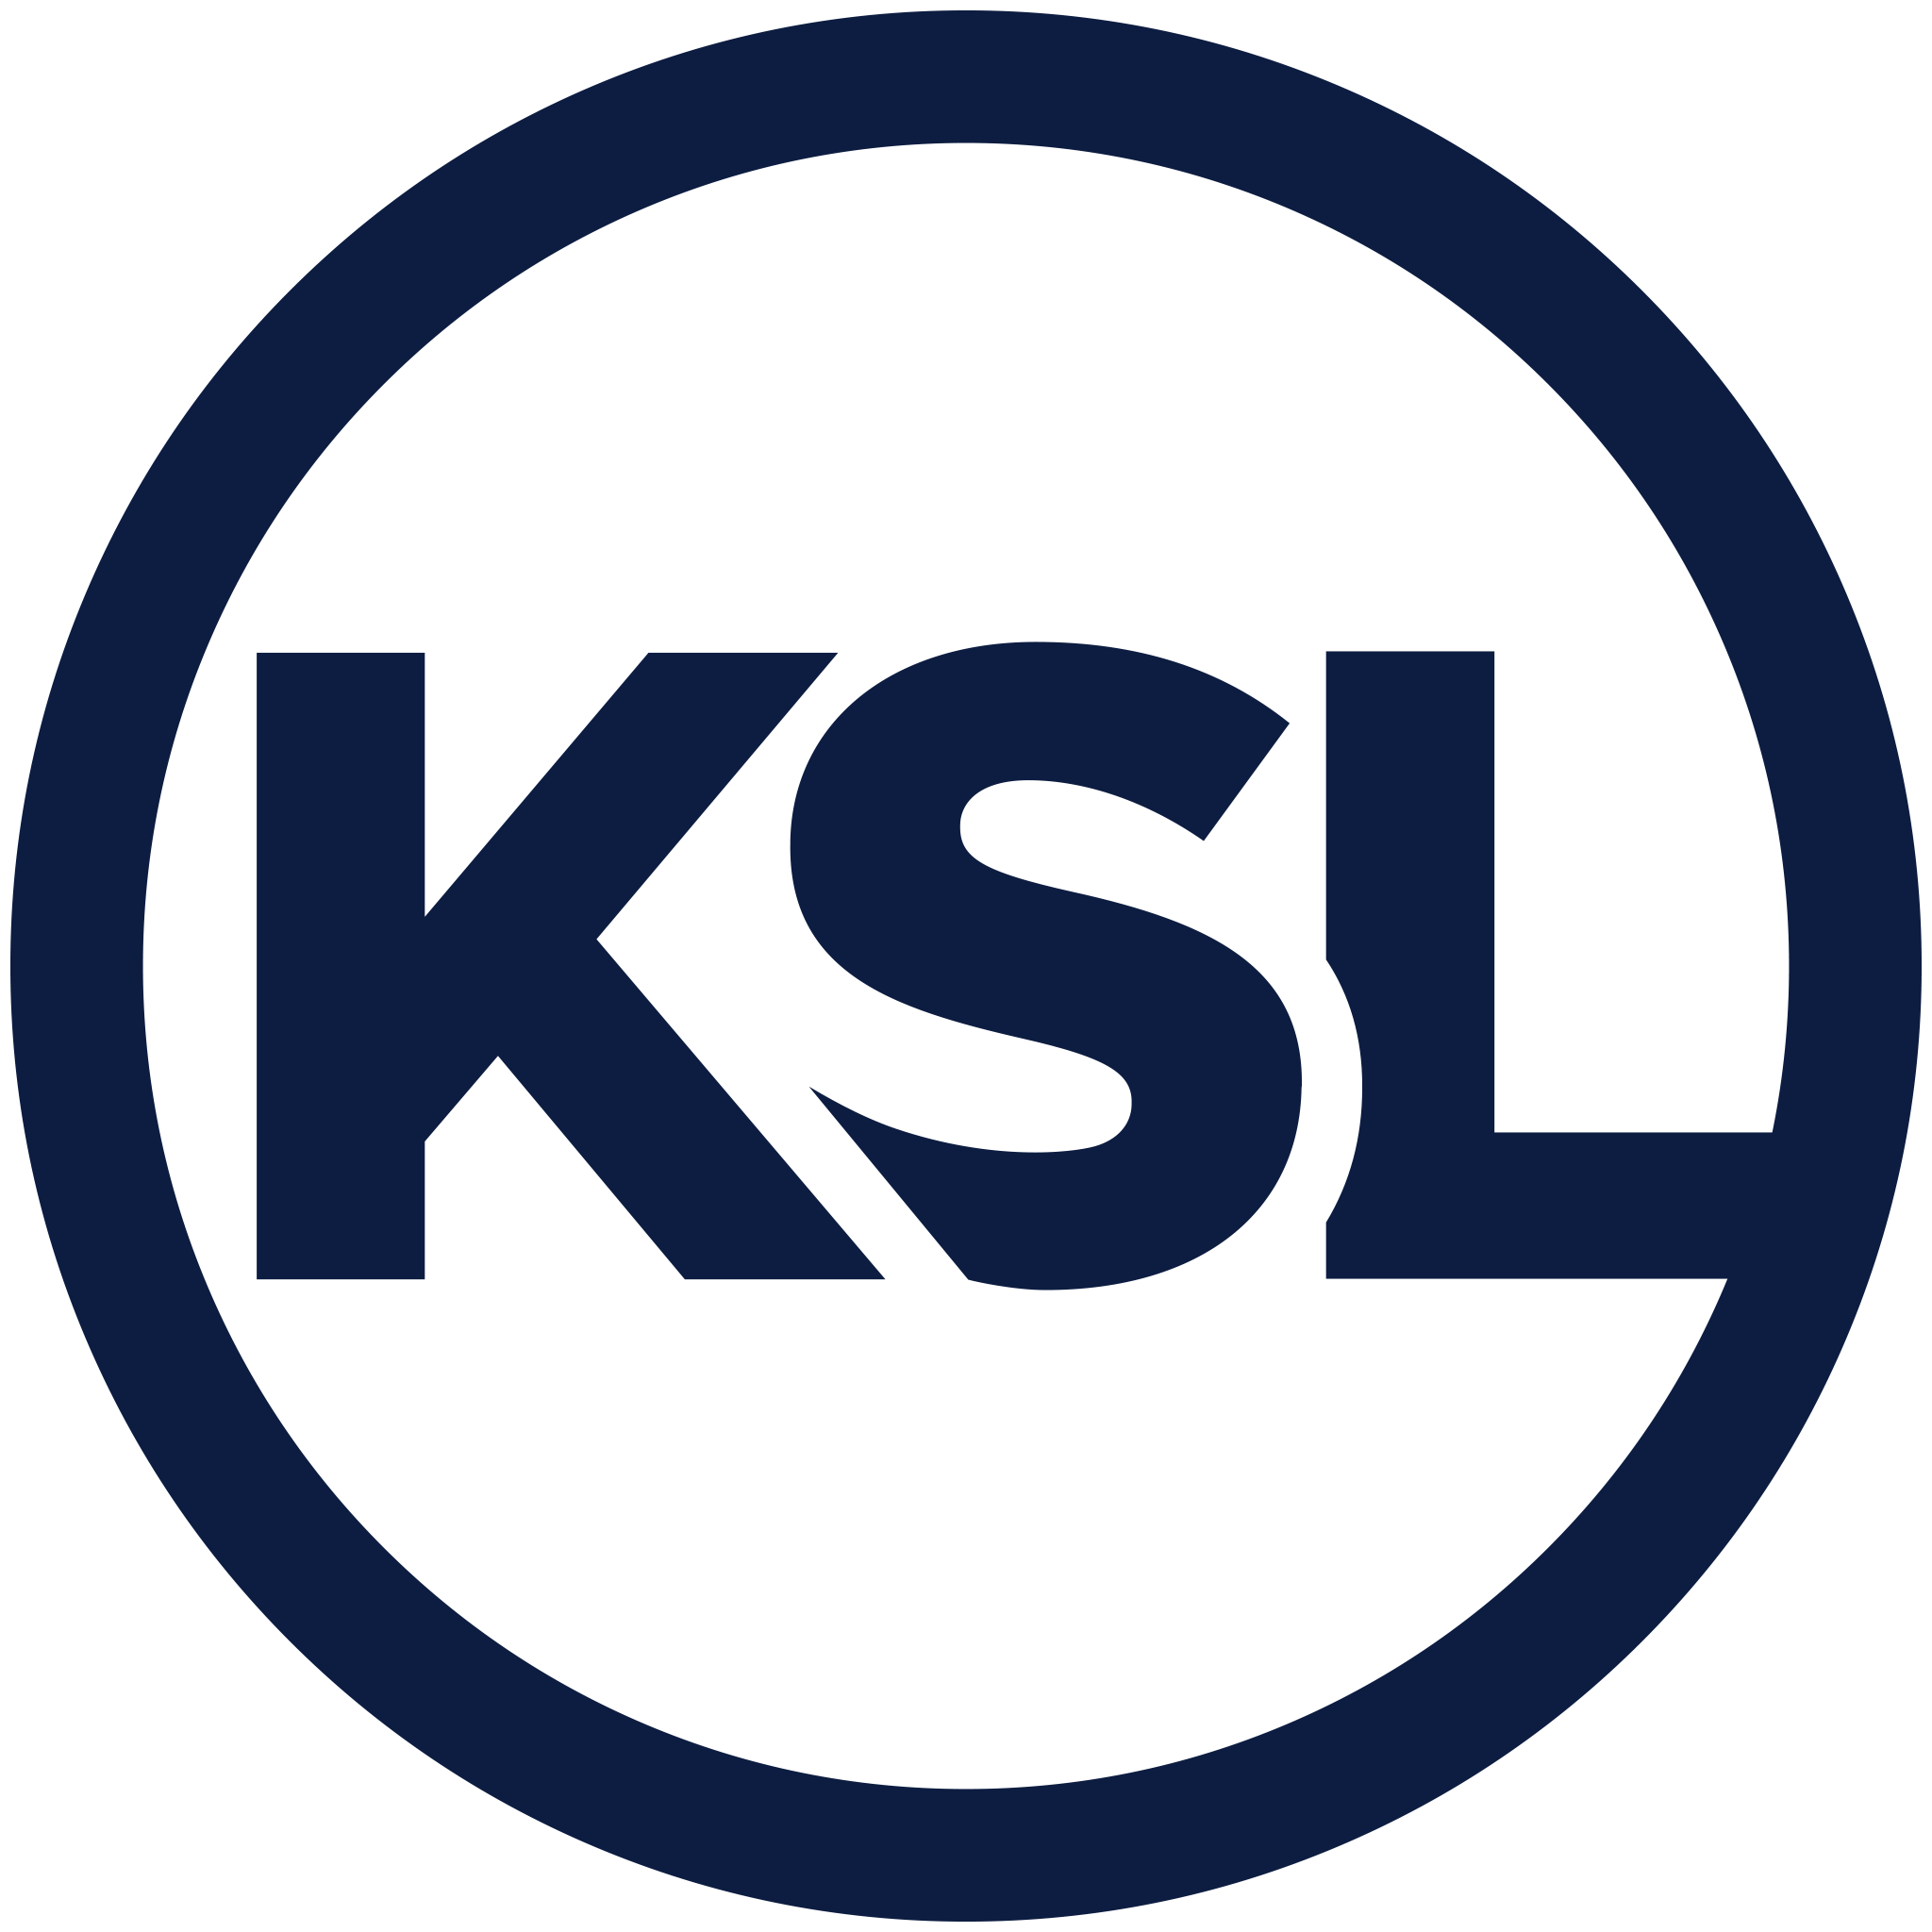 KSL Podcasts – Original Shows and What You Missed on KSL